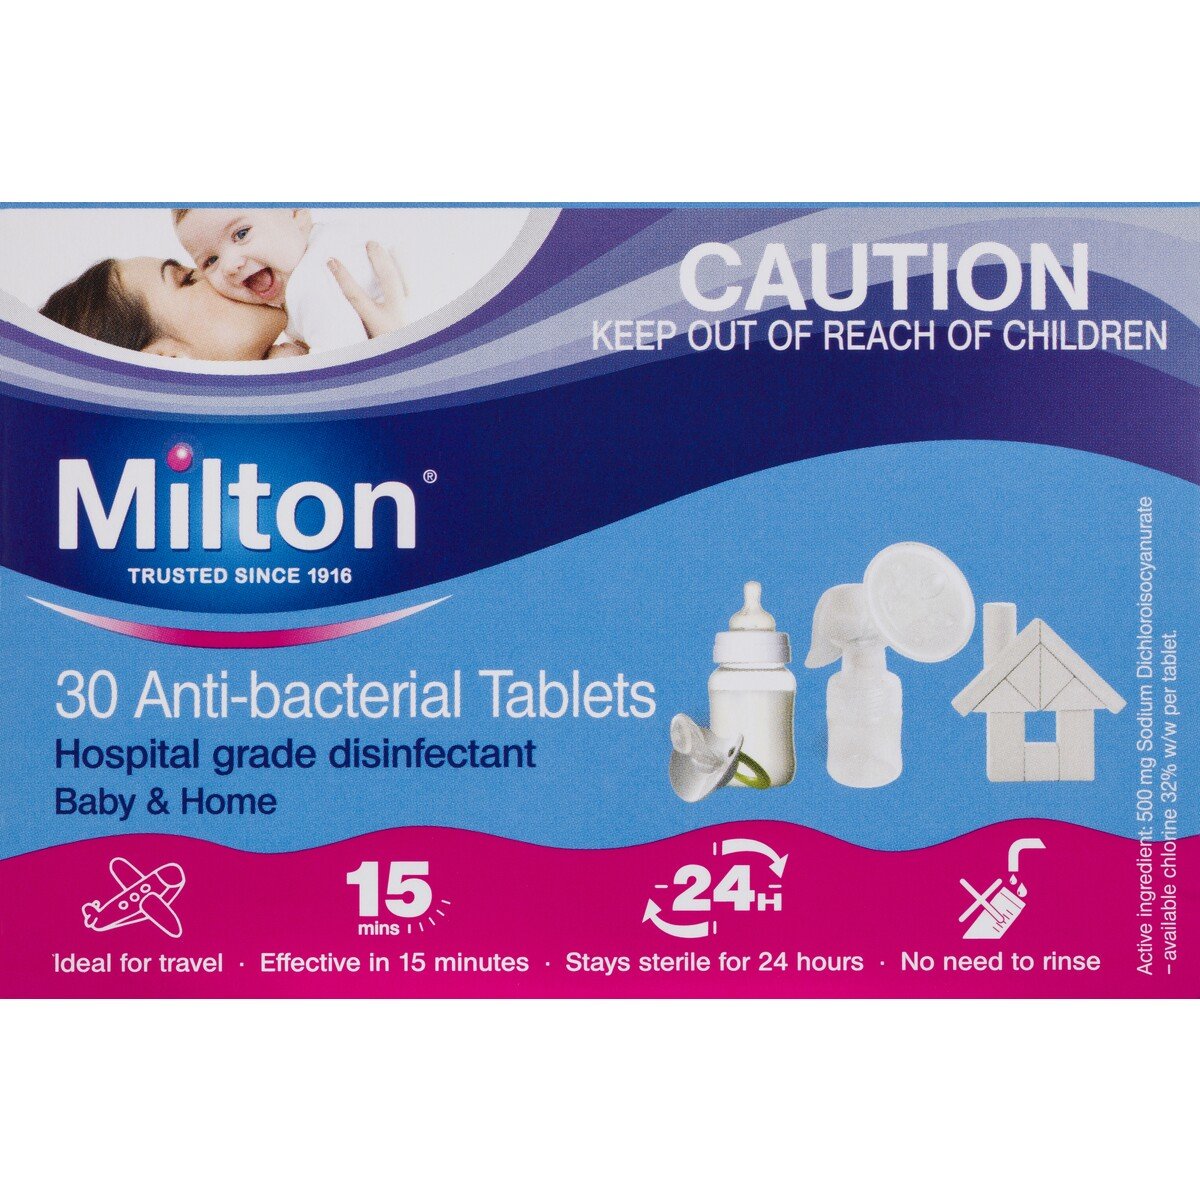 Milton Anti-Bacterial Tablets BOX 30